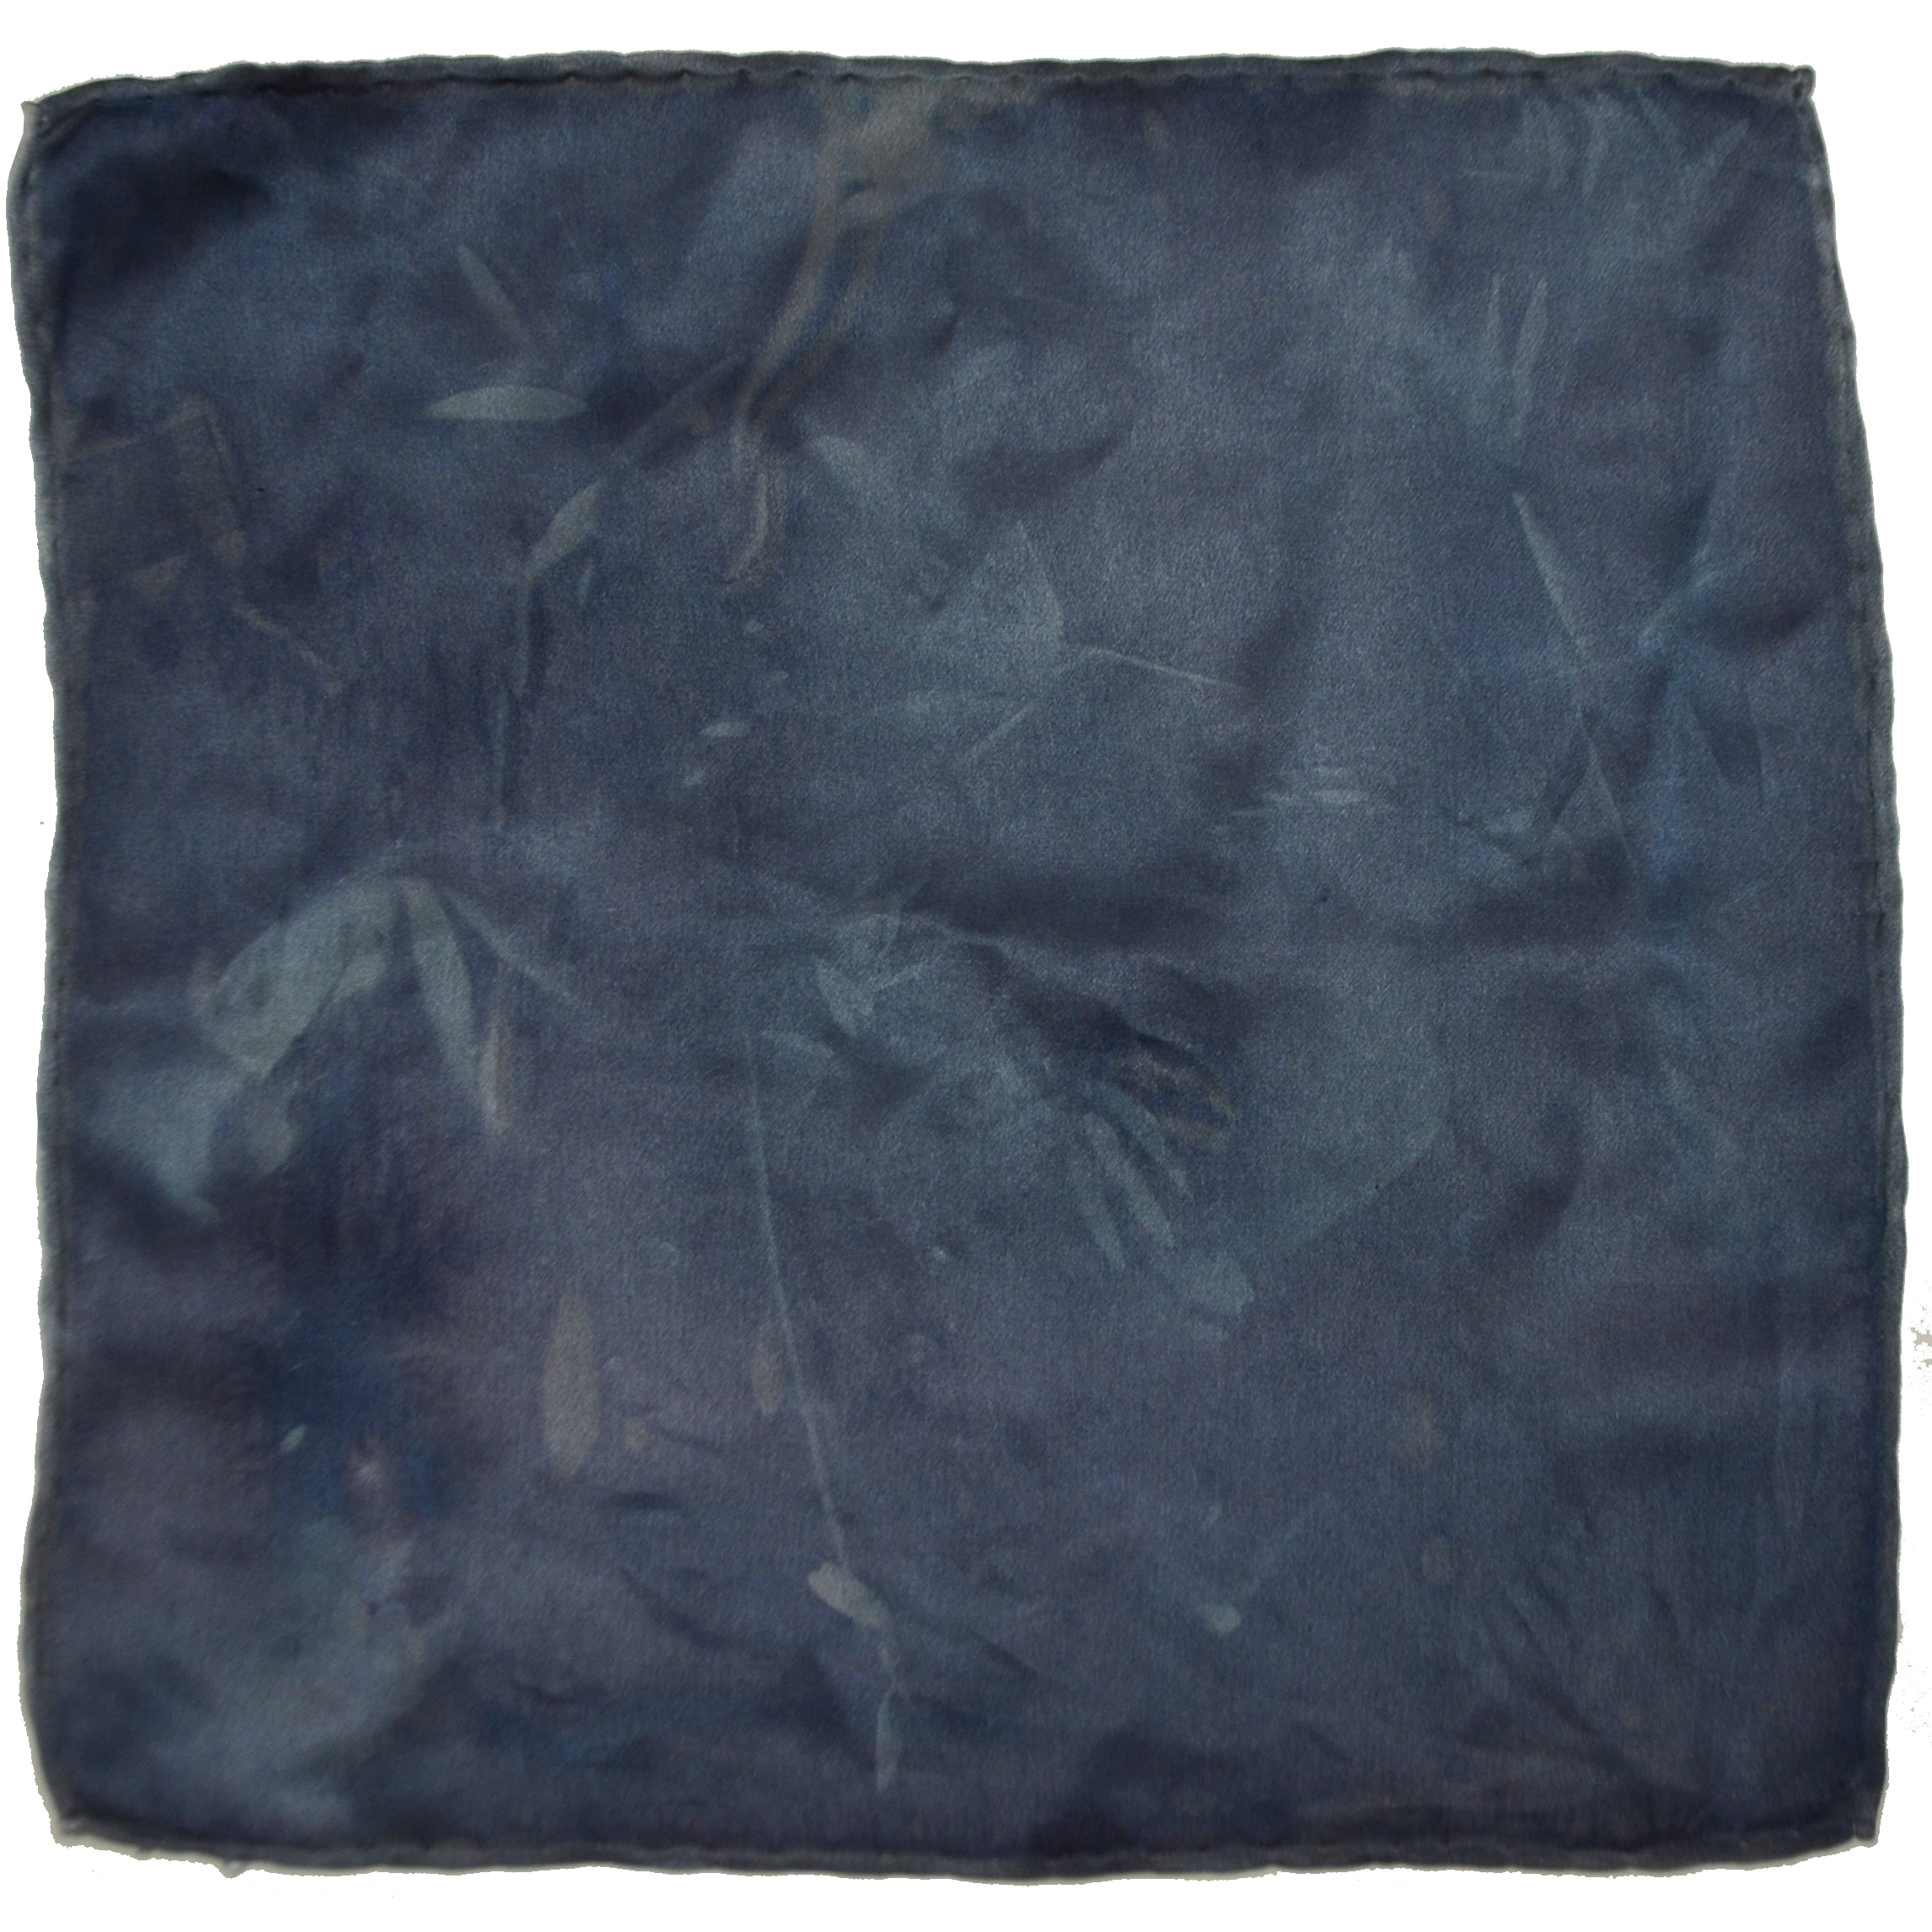 Hand-dyed handkerchief by Gabrielle Sichel